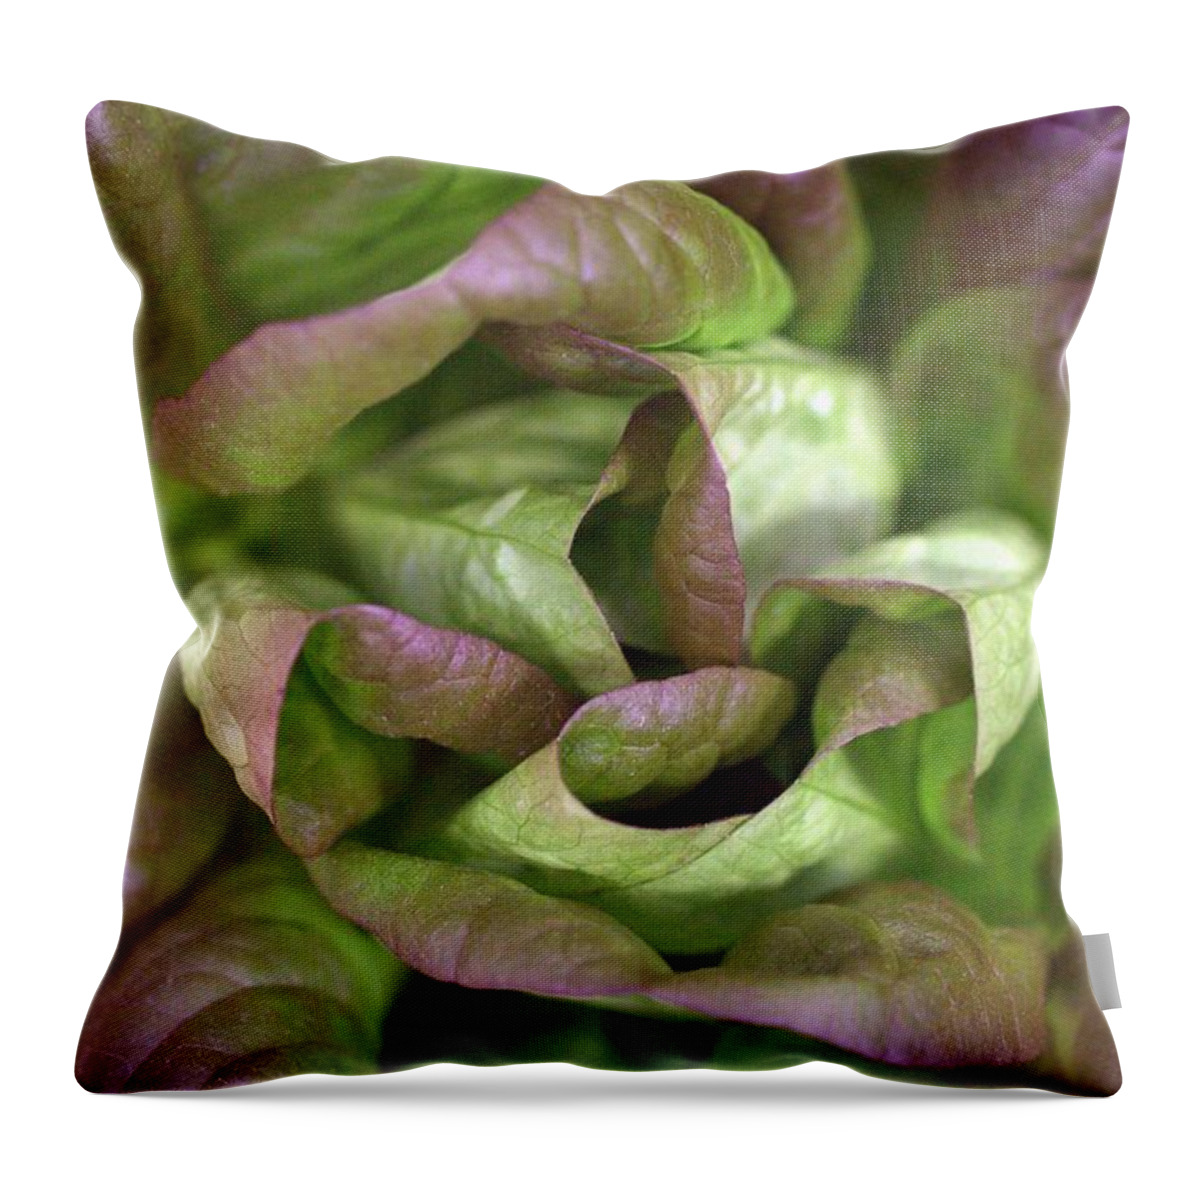 Lettuce Throw Pillow featuring the photograph New Lettuce by Joseph Skompski